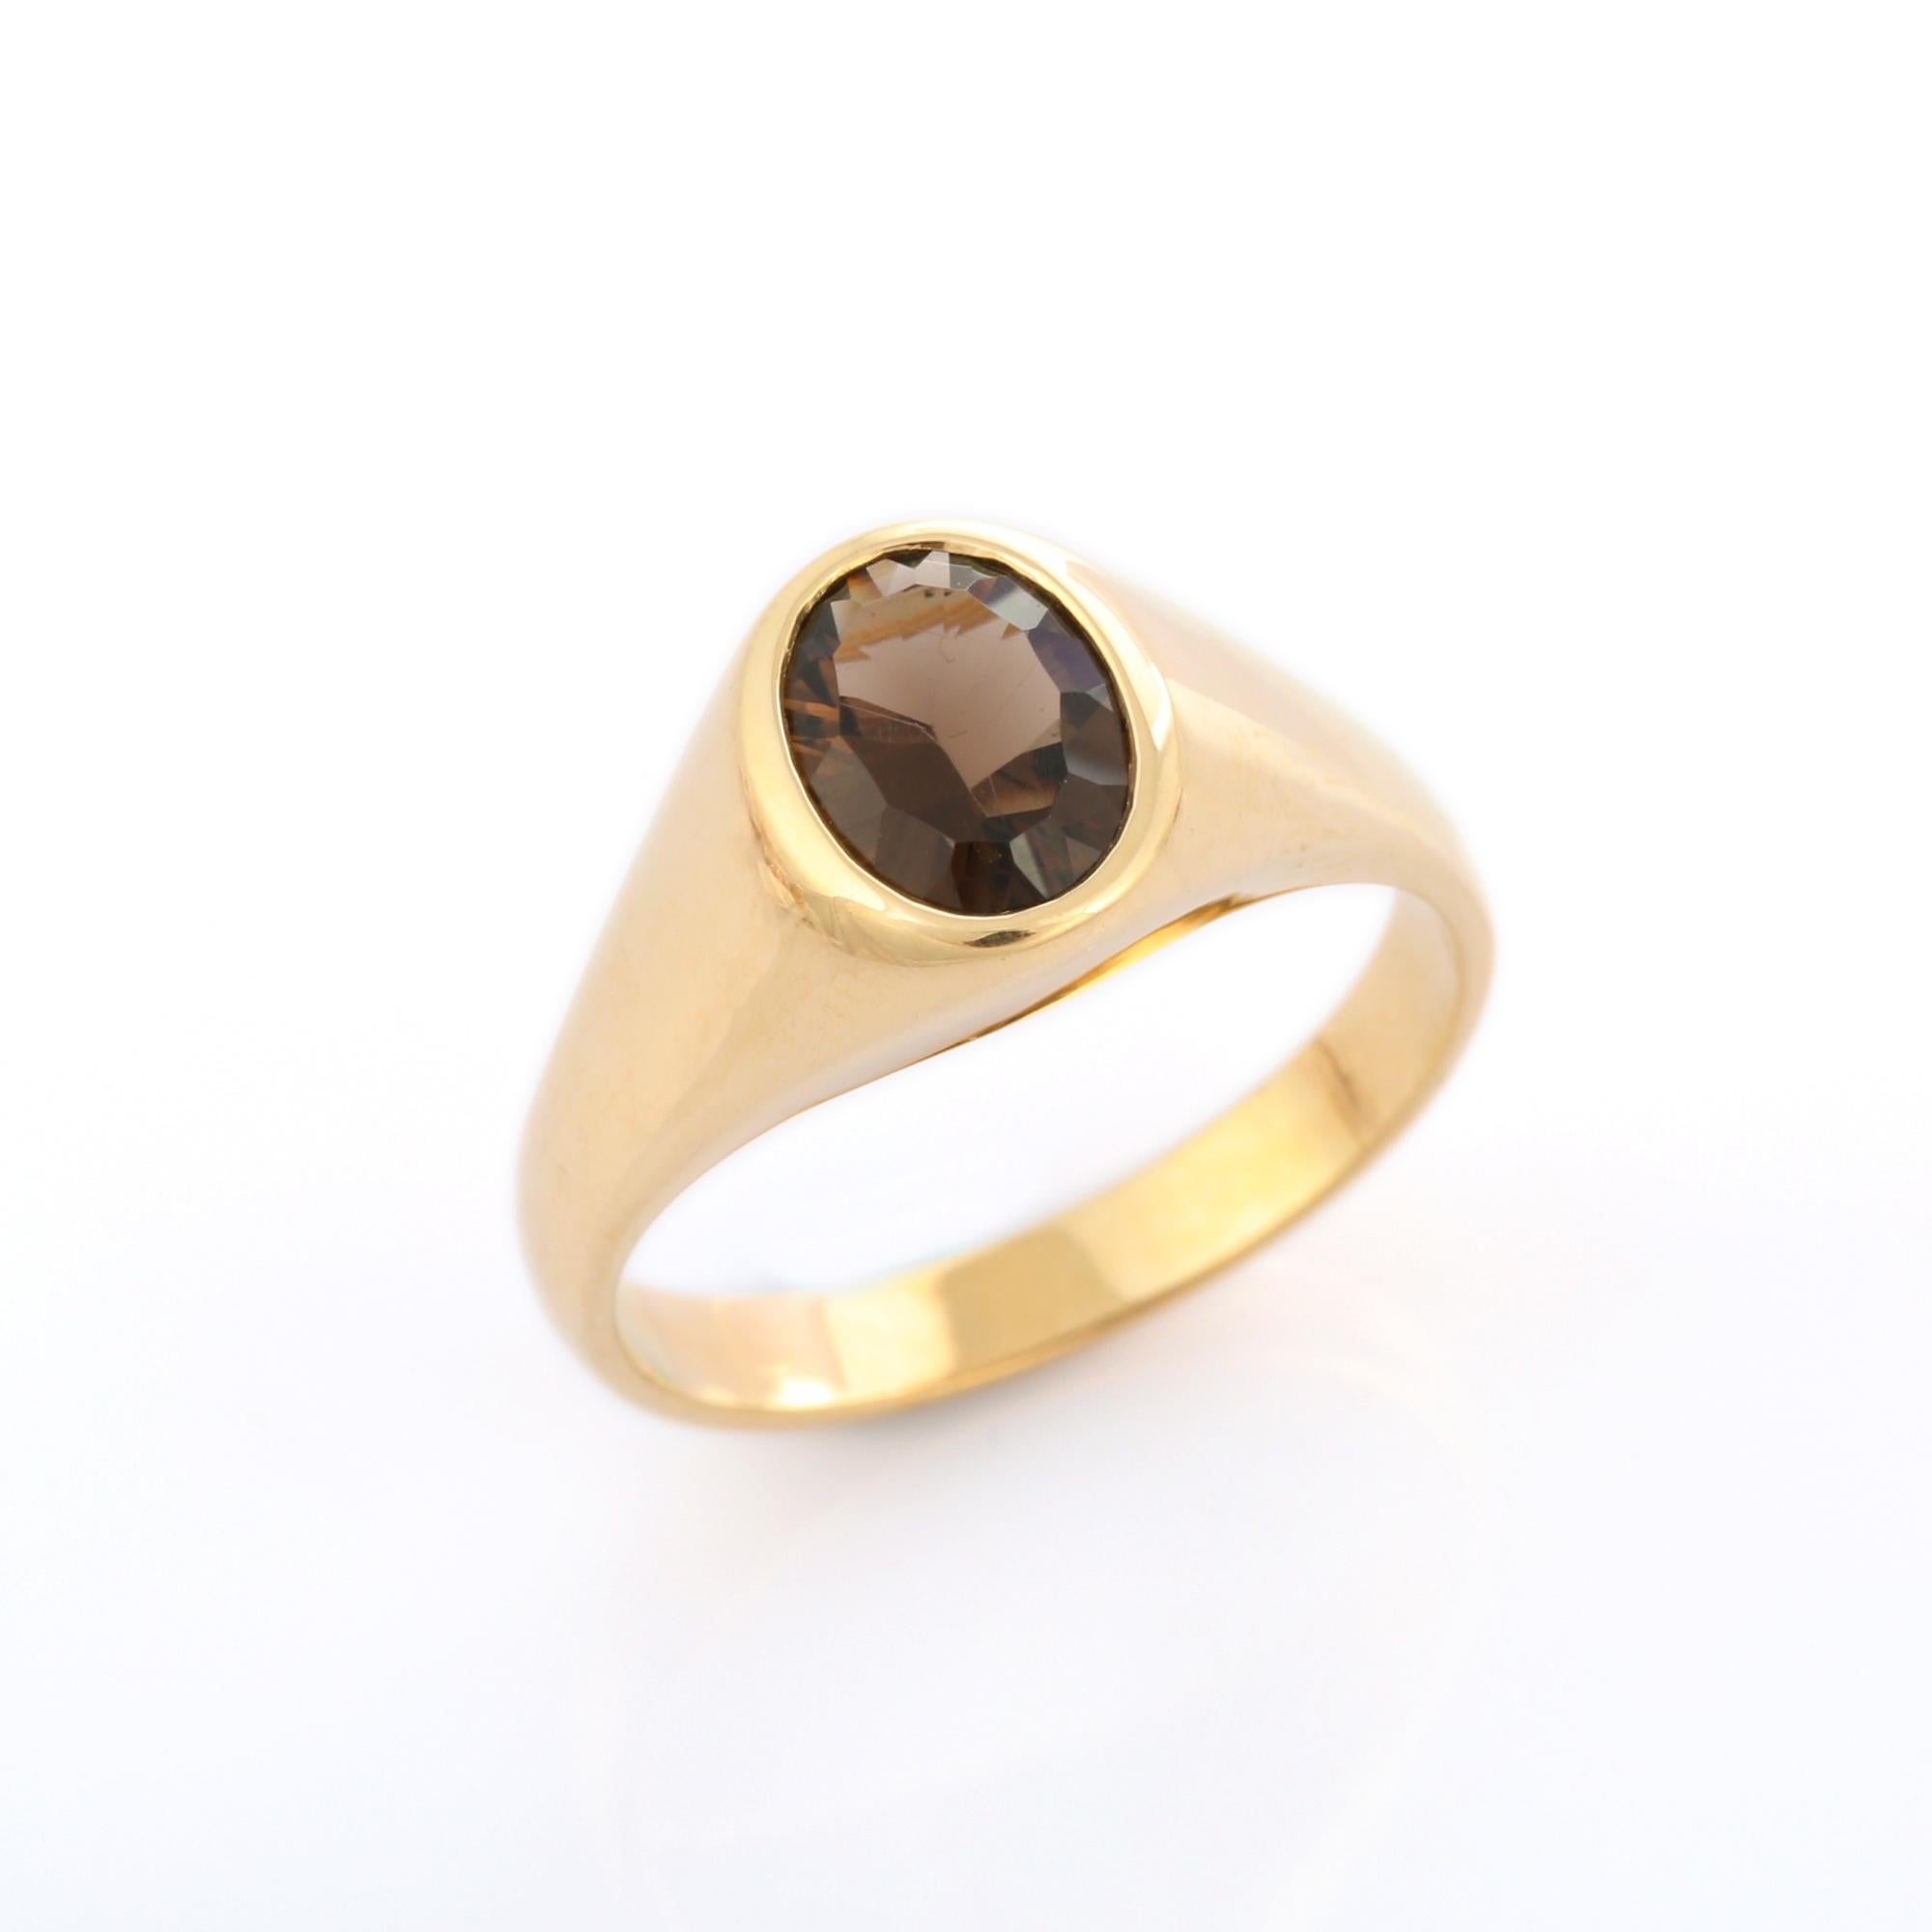 For Sale:  Unisex 14K Yellow Gold Smoky Topaz Gemstone Ring 6